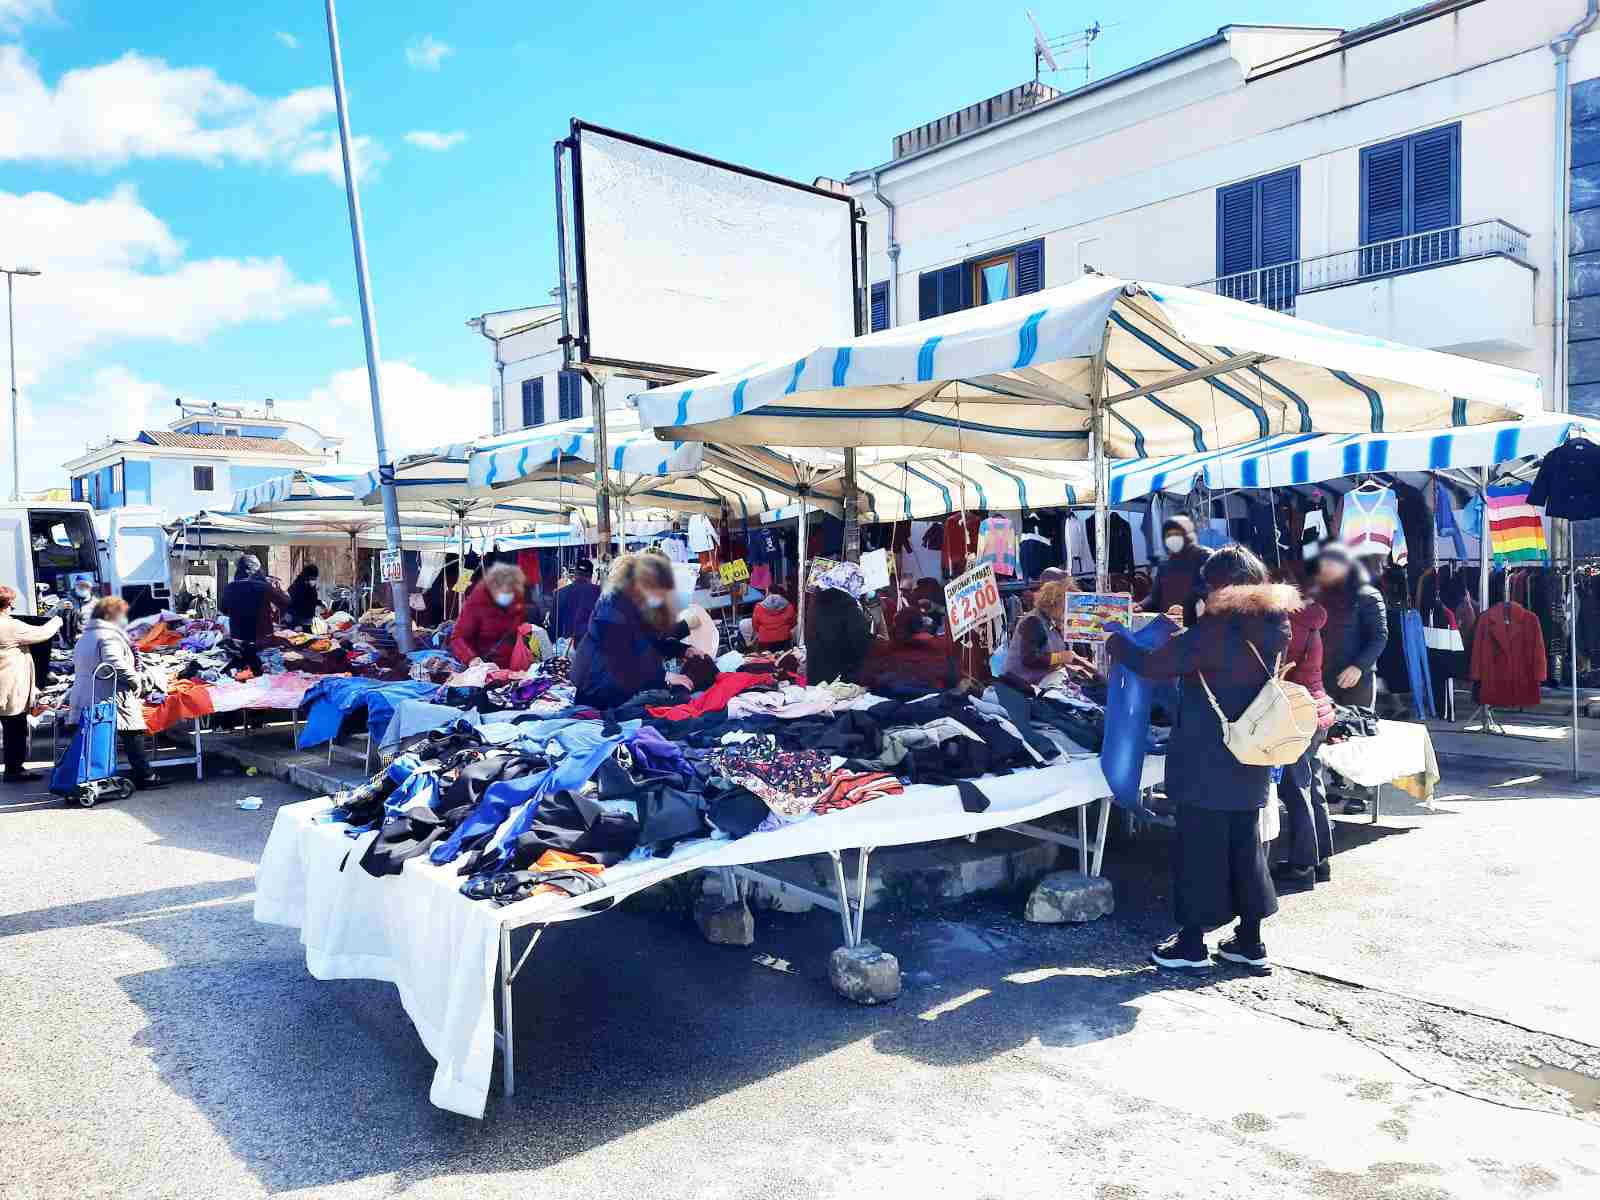 Venerdì 6 gennaio si svolgerà regolarmente la fiera mercato di Via Aldo Moro